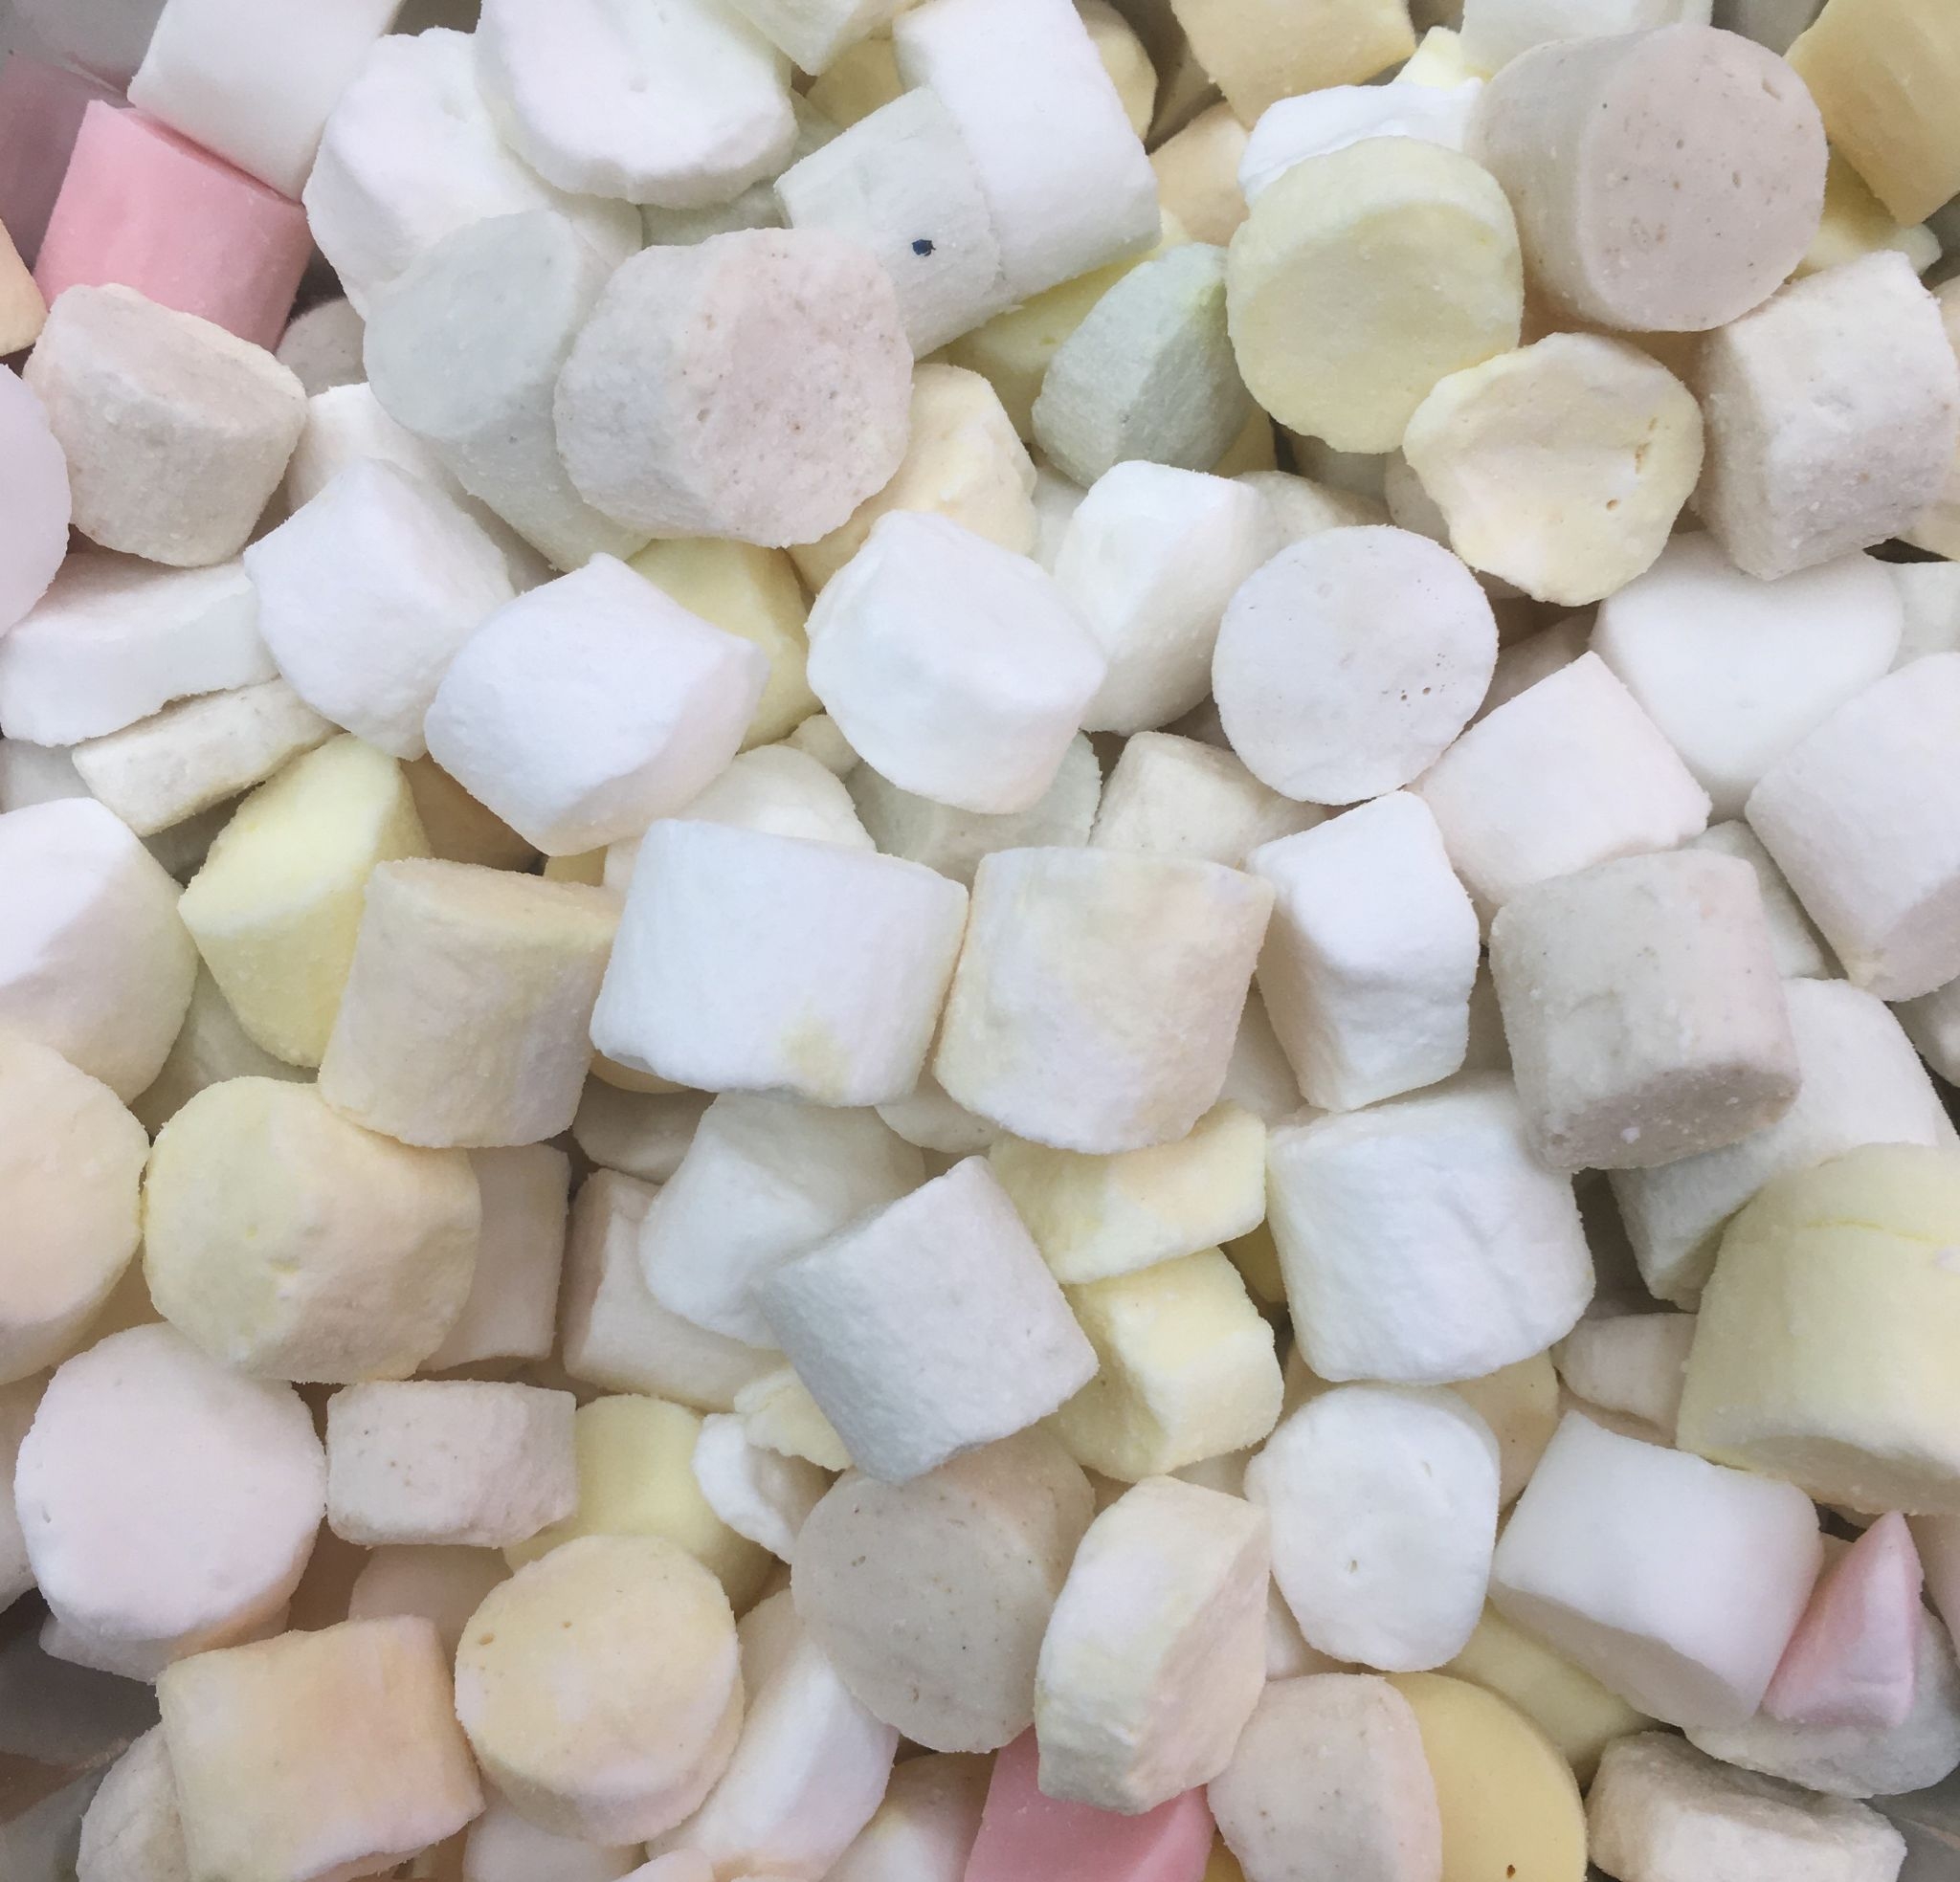 Edinburgh Rock Sweets 100g – Bag 100g – Confection Affection